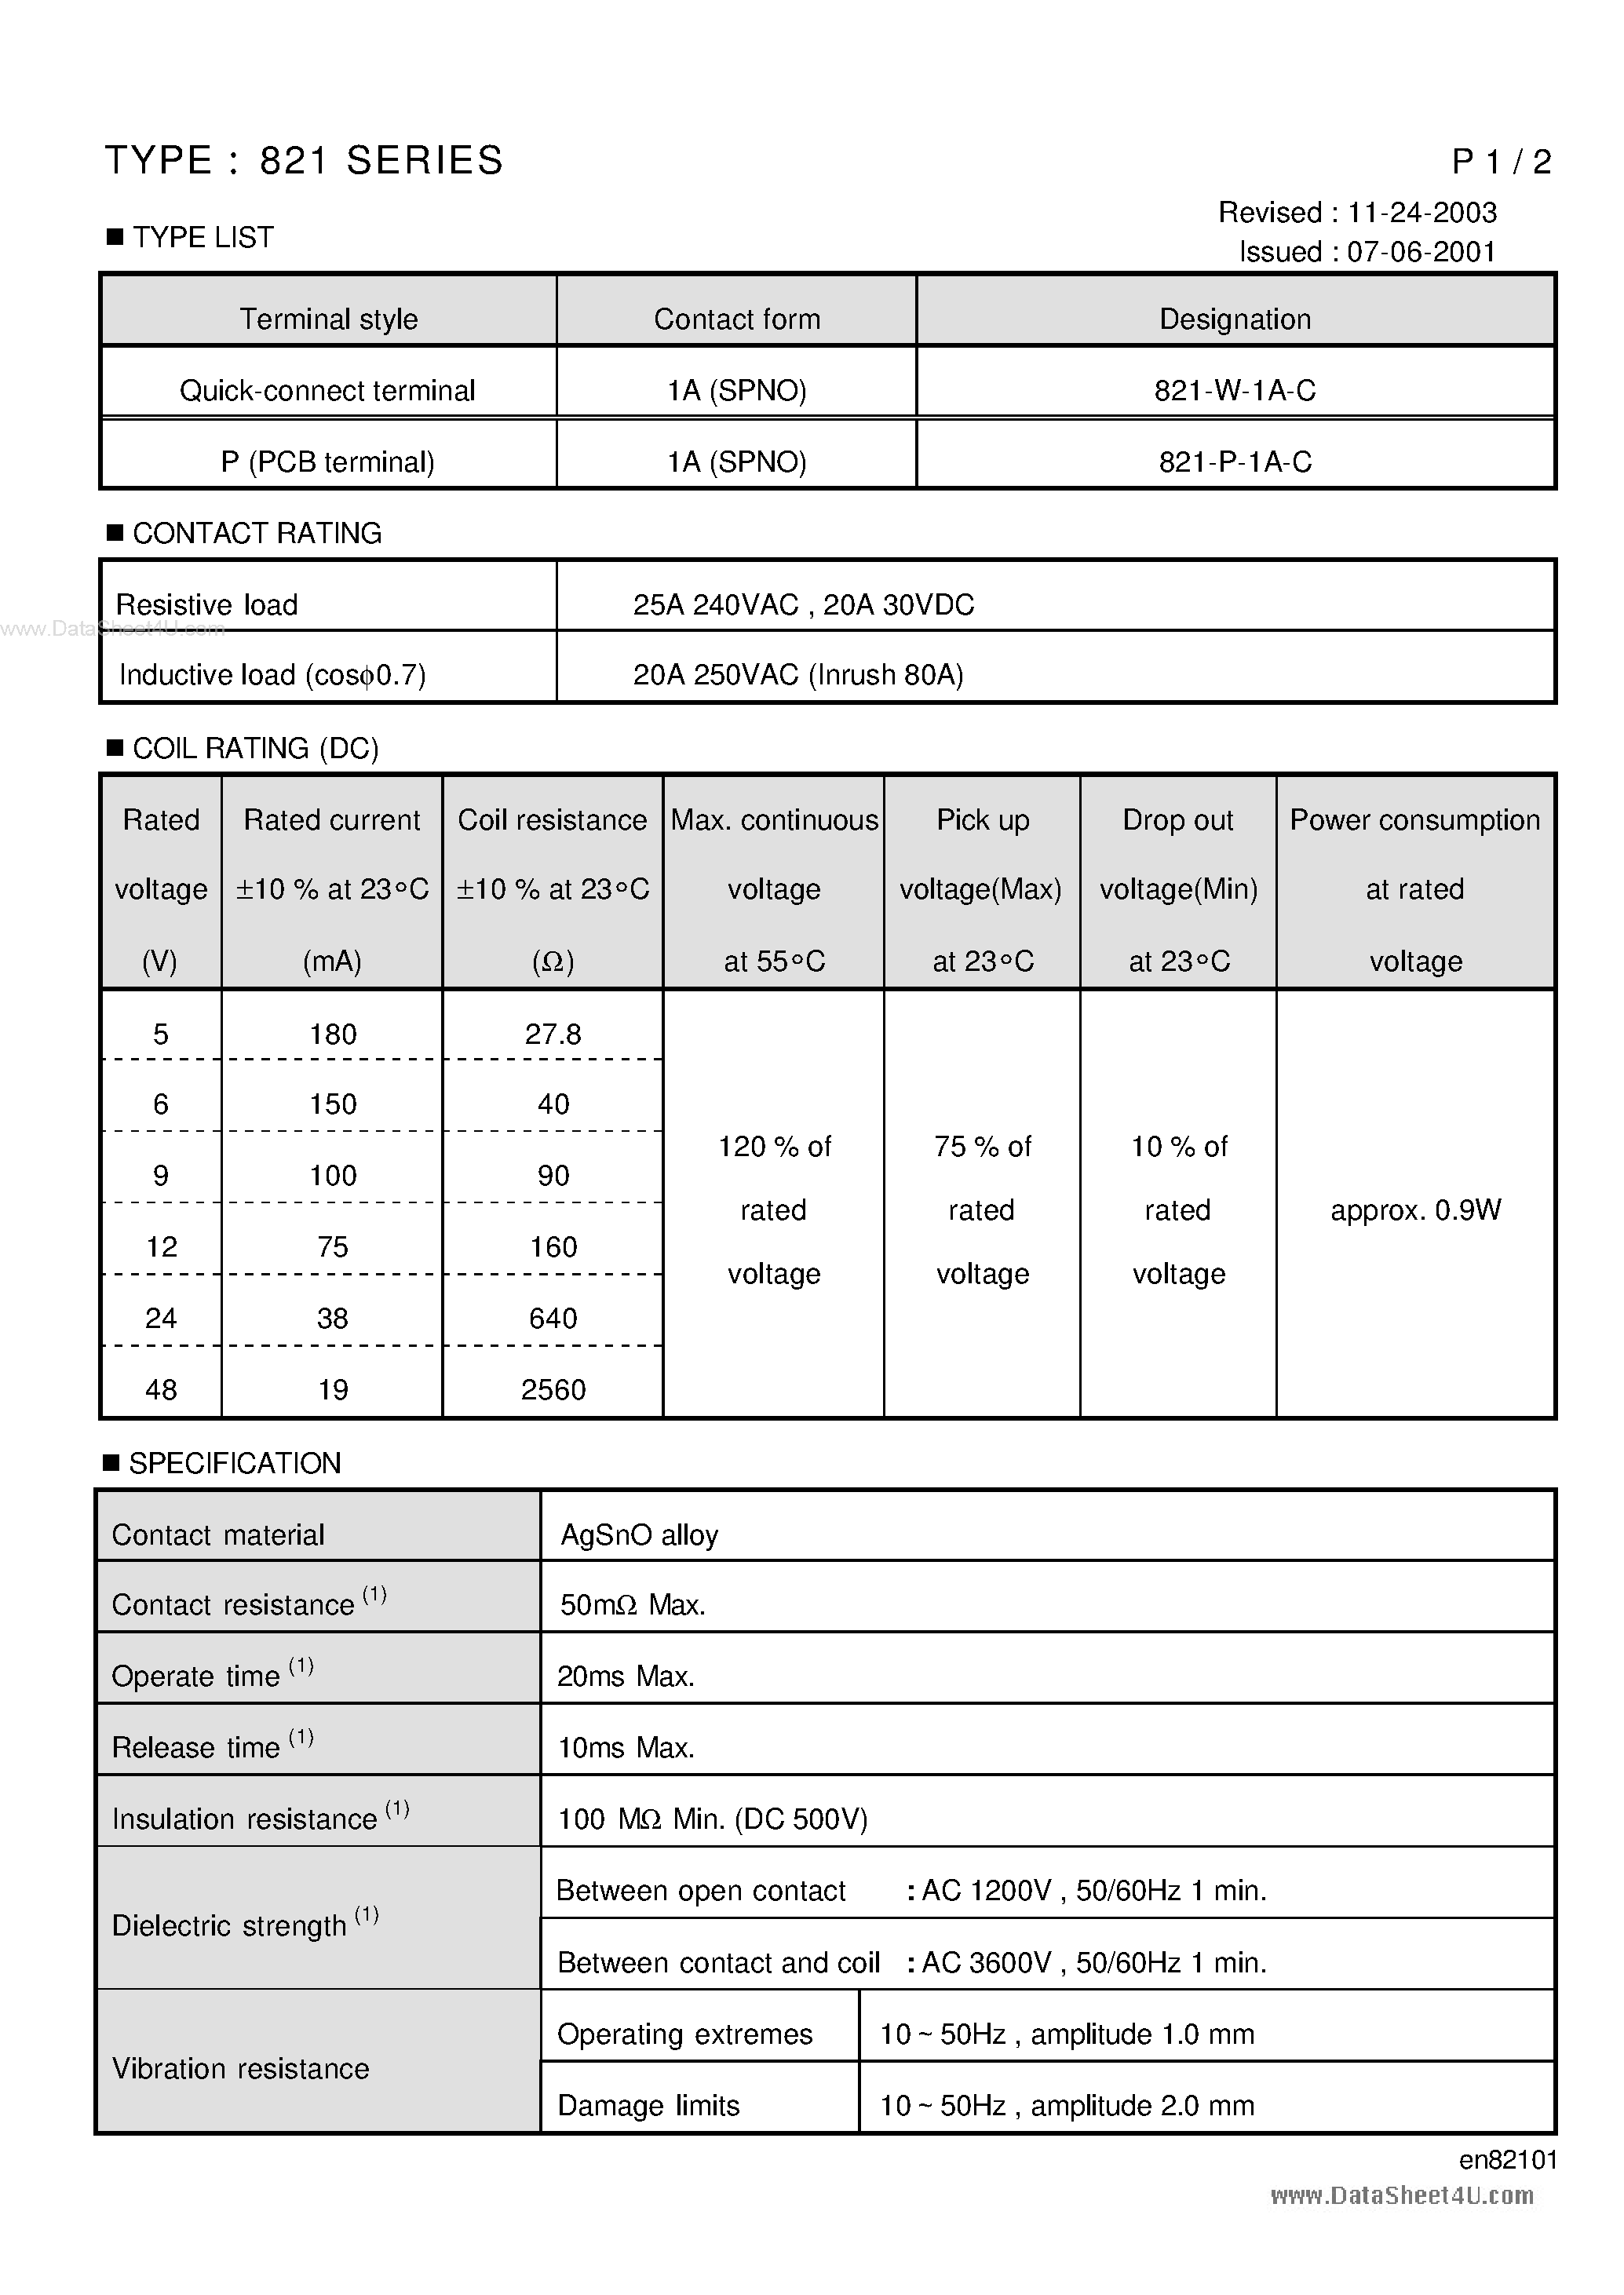 Datasheet 821-P-1A-C - 821 Series page 1